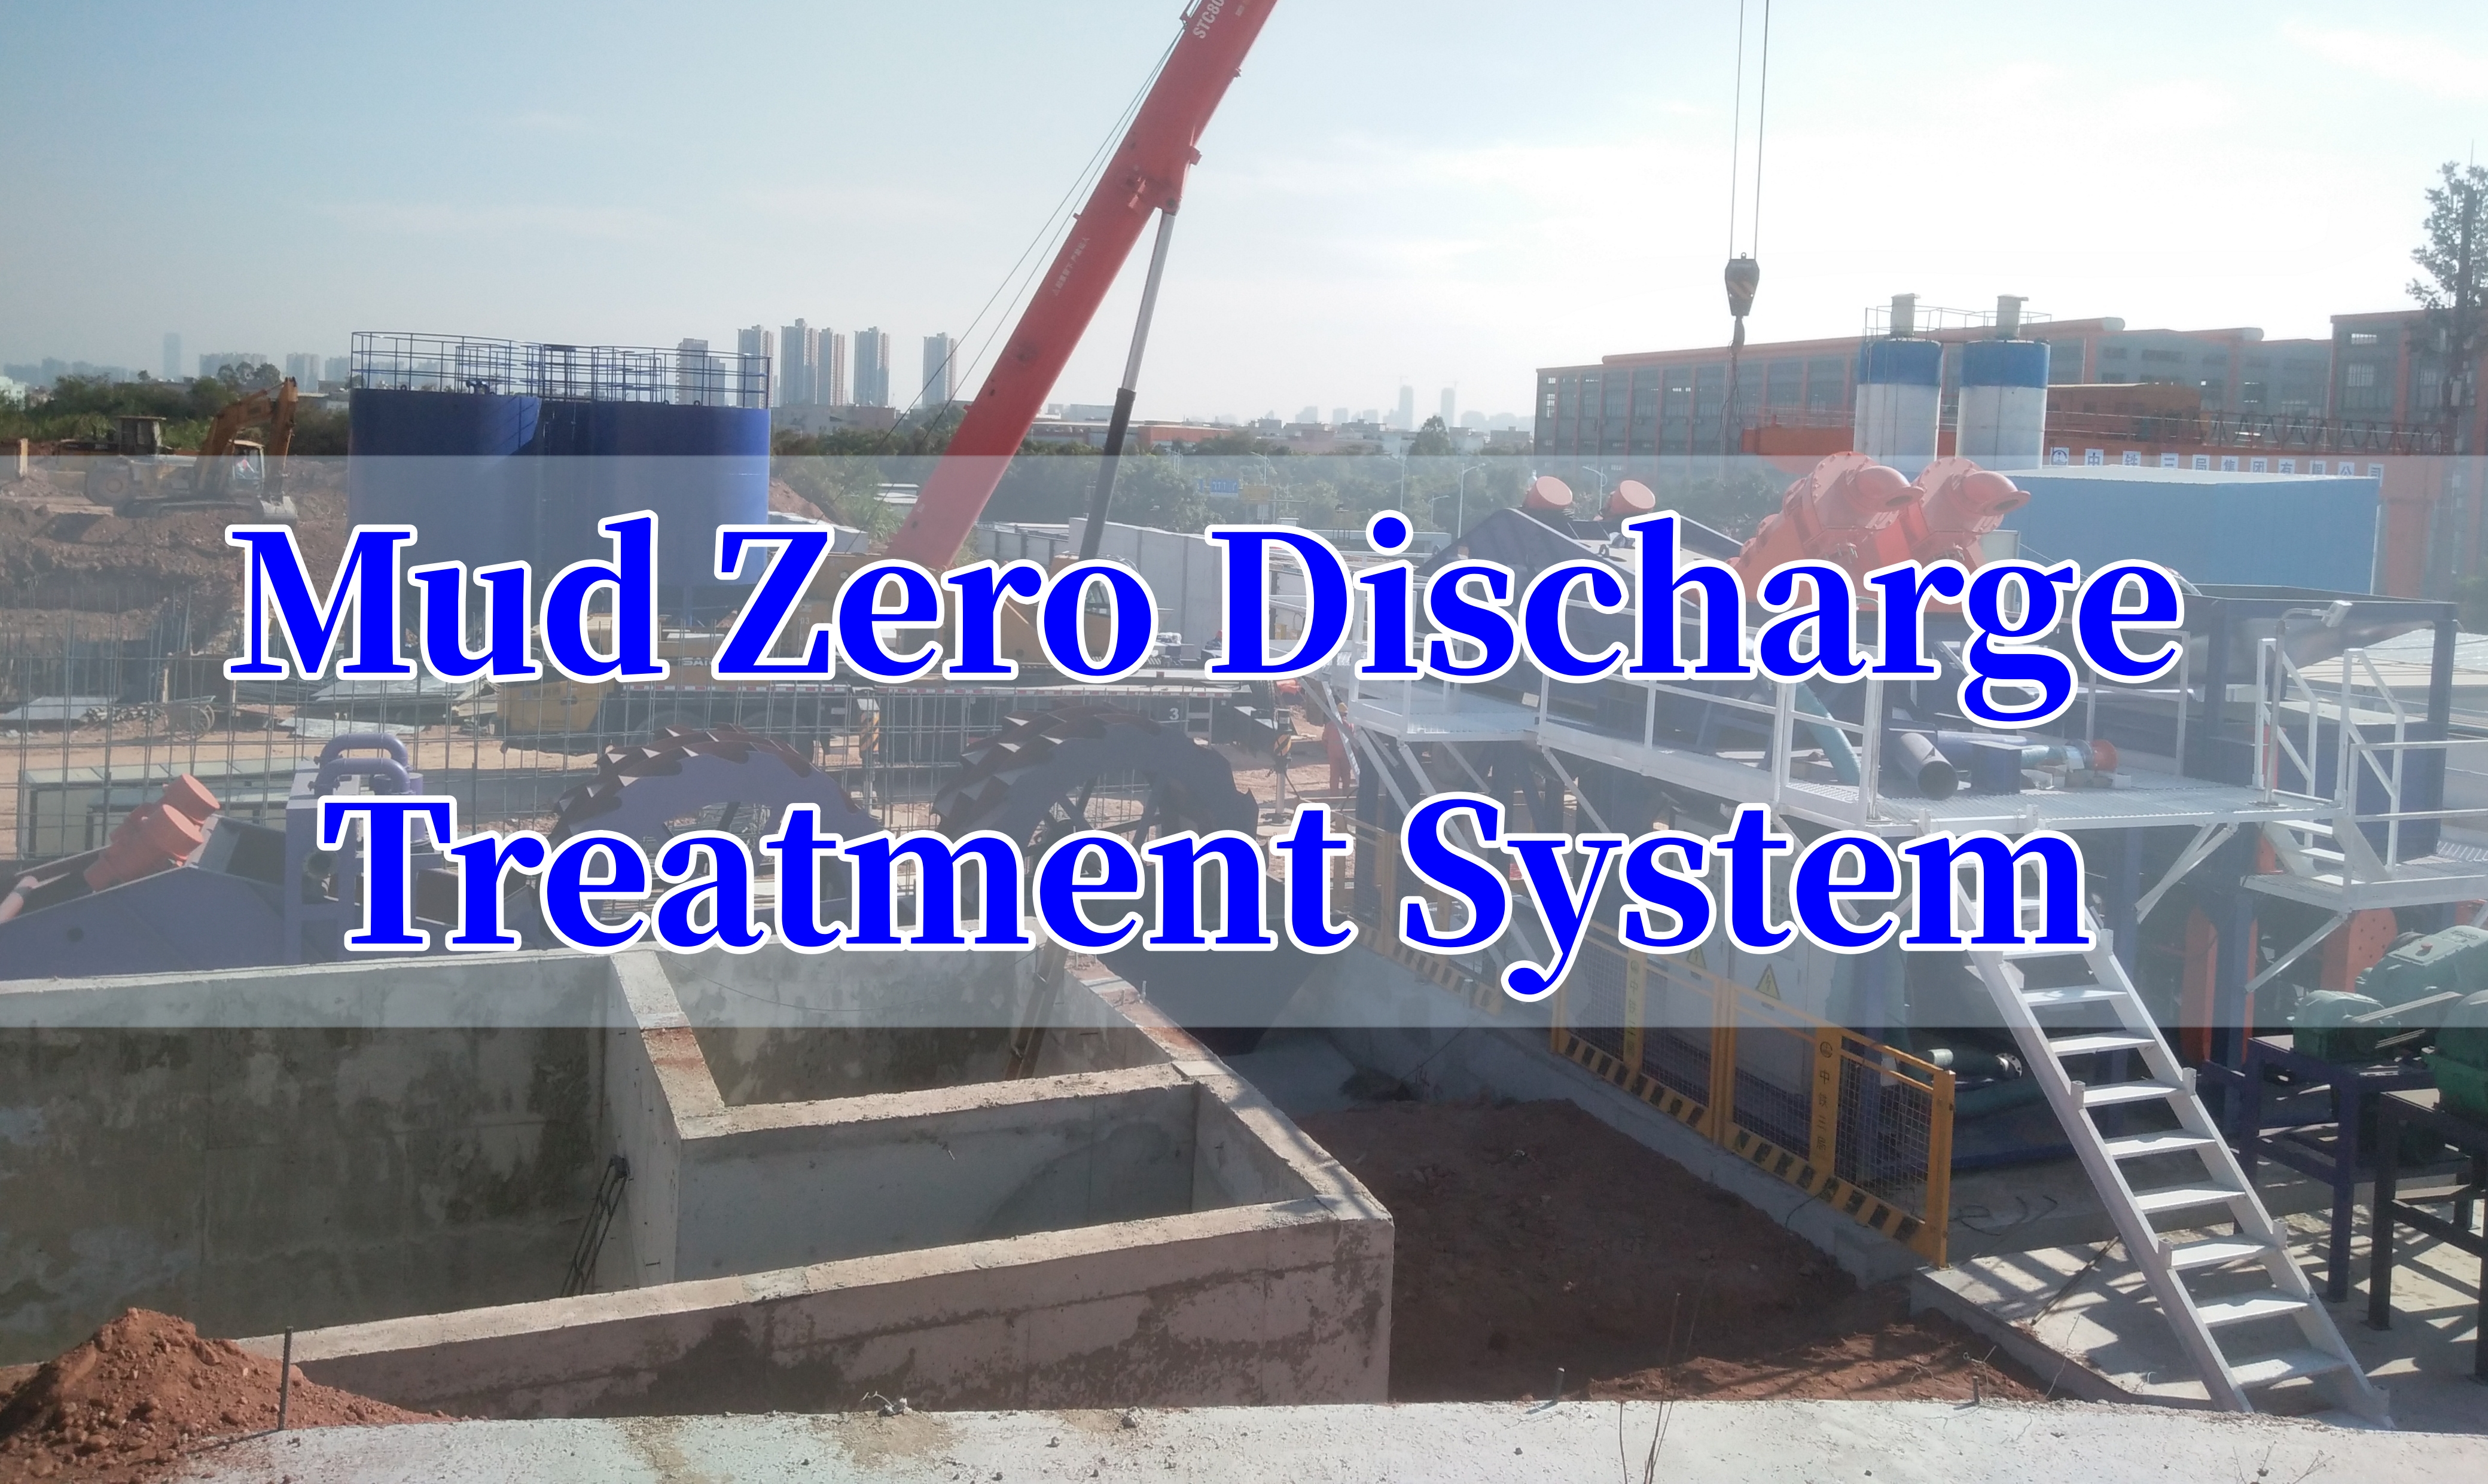 Mud Zero Discharge Treatment System